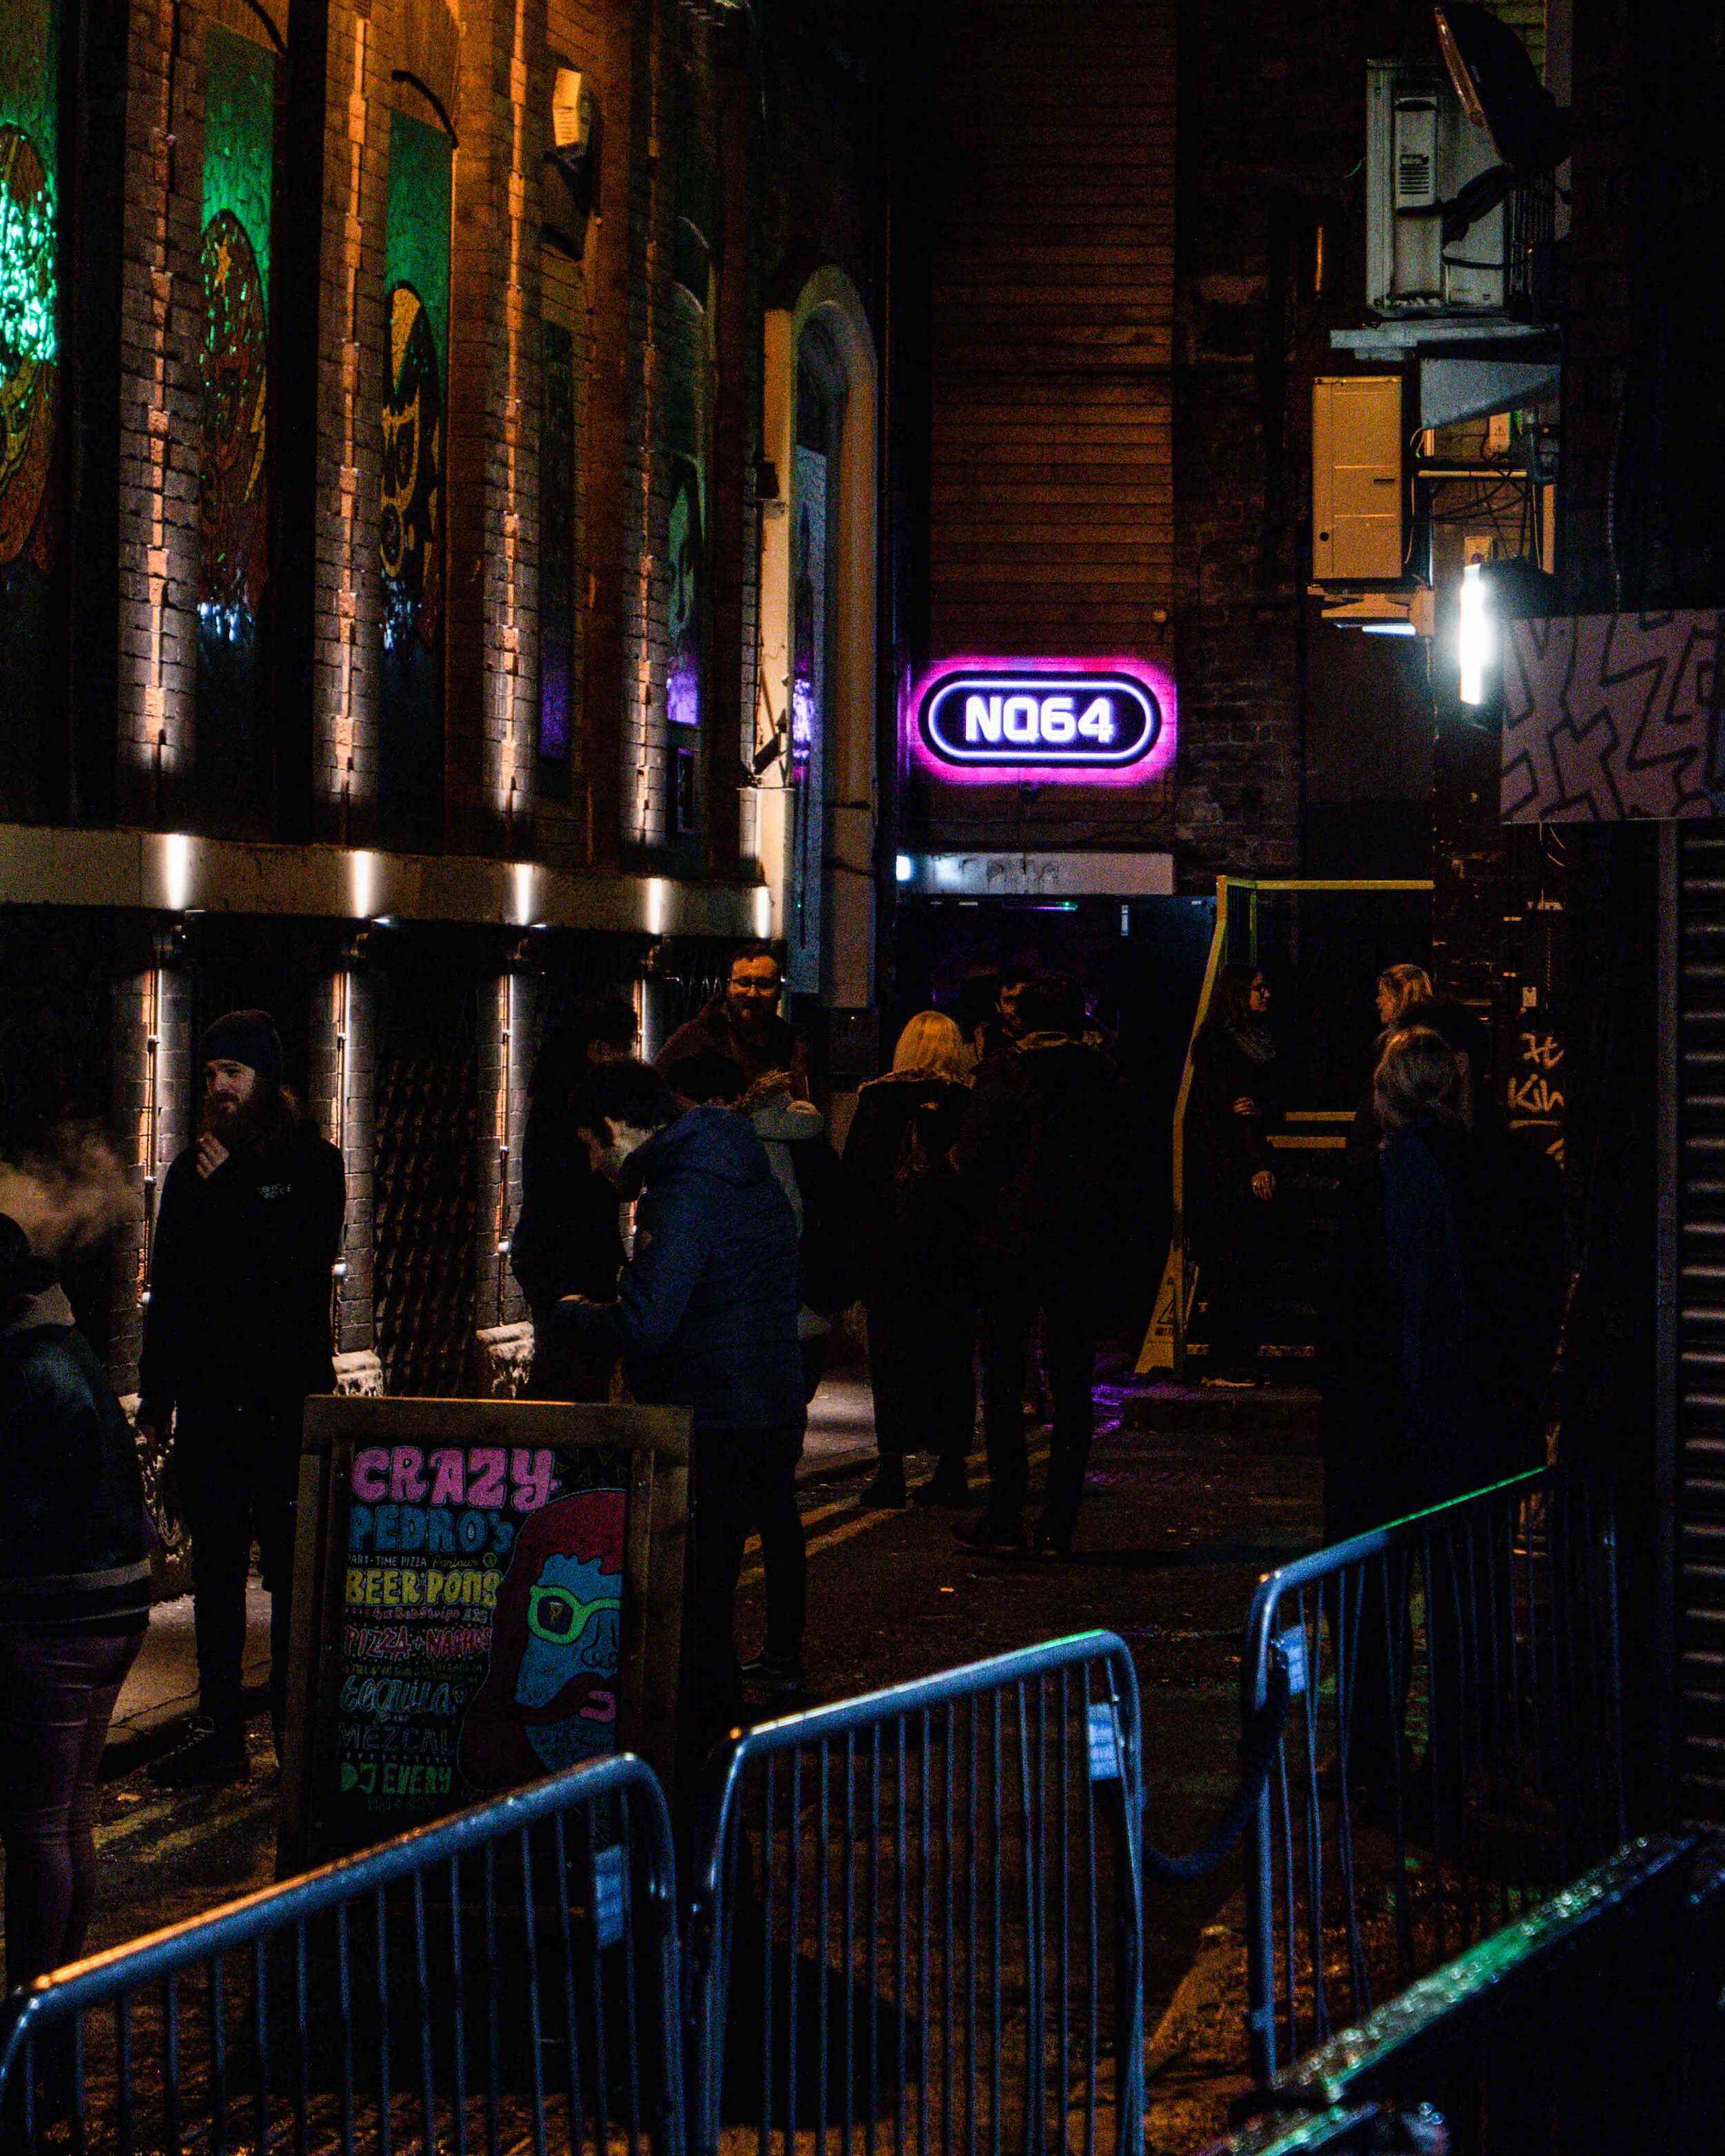 Arcade bar NQ64 in Manchester, free stock photography.jpg